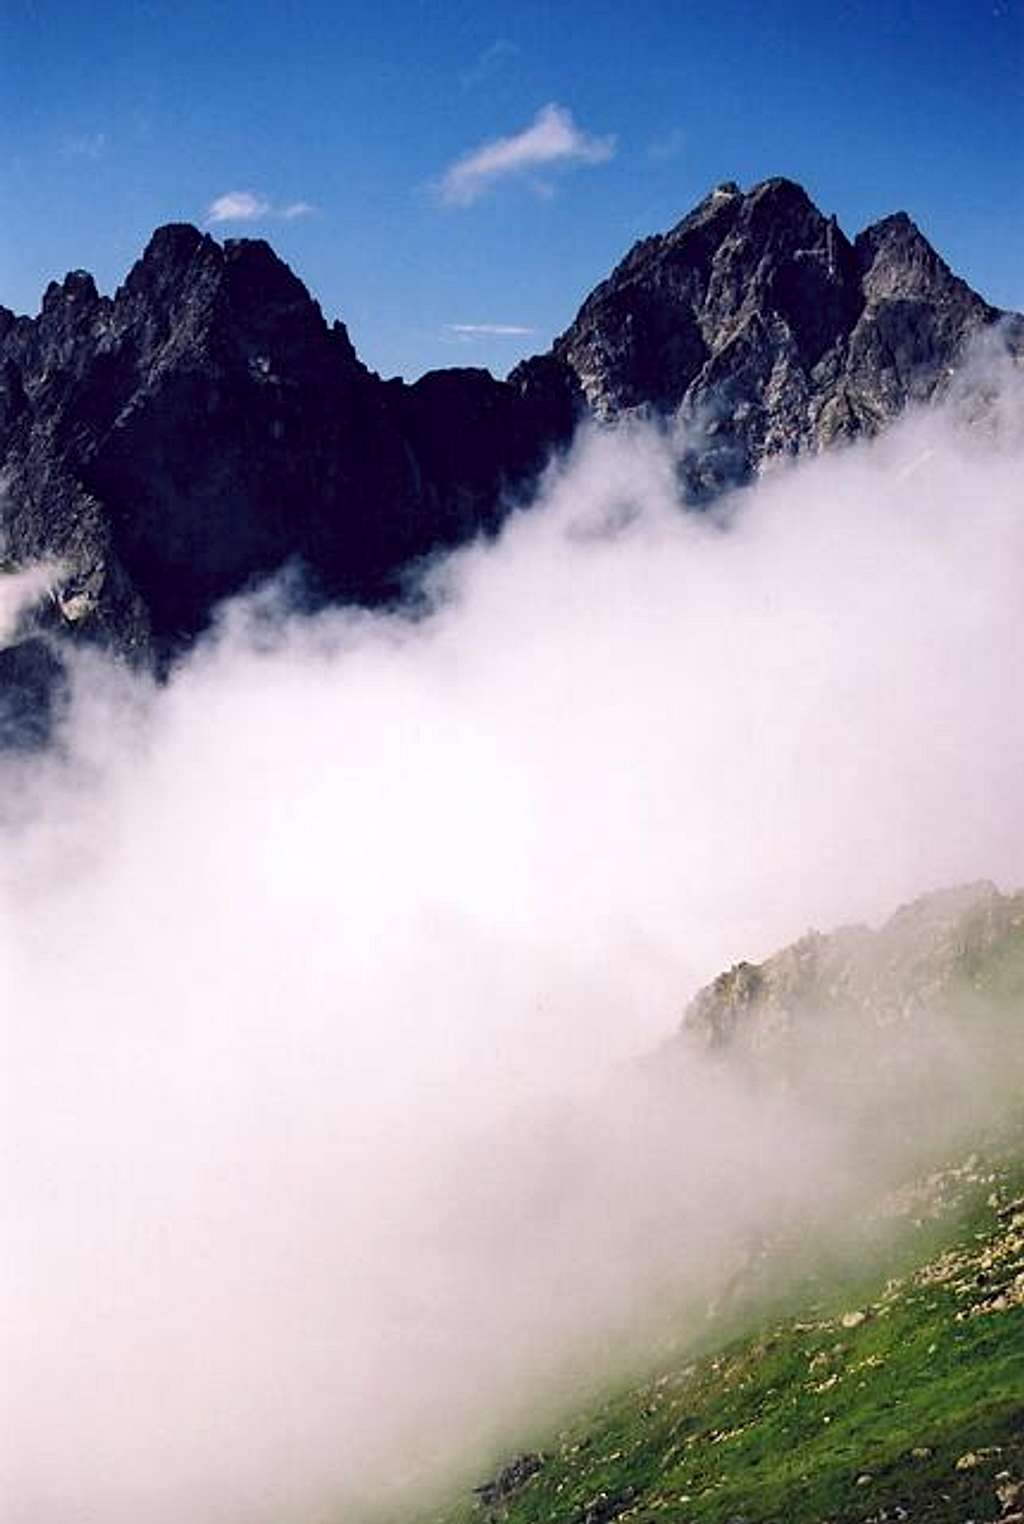 Ganek(left) and Vysoka peaks...